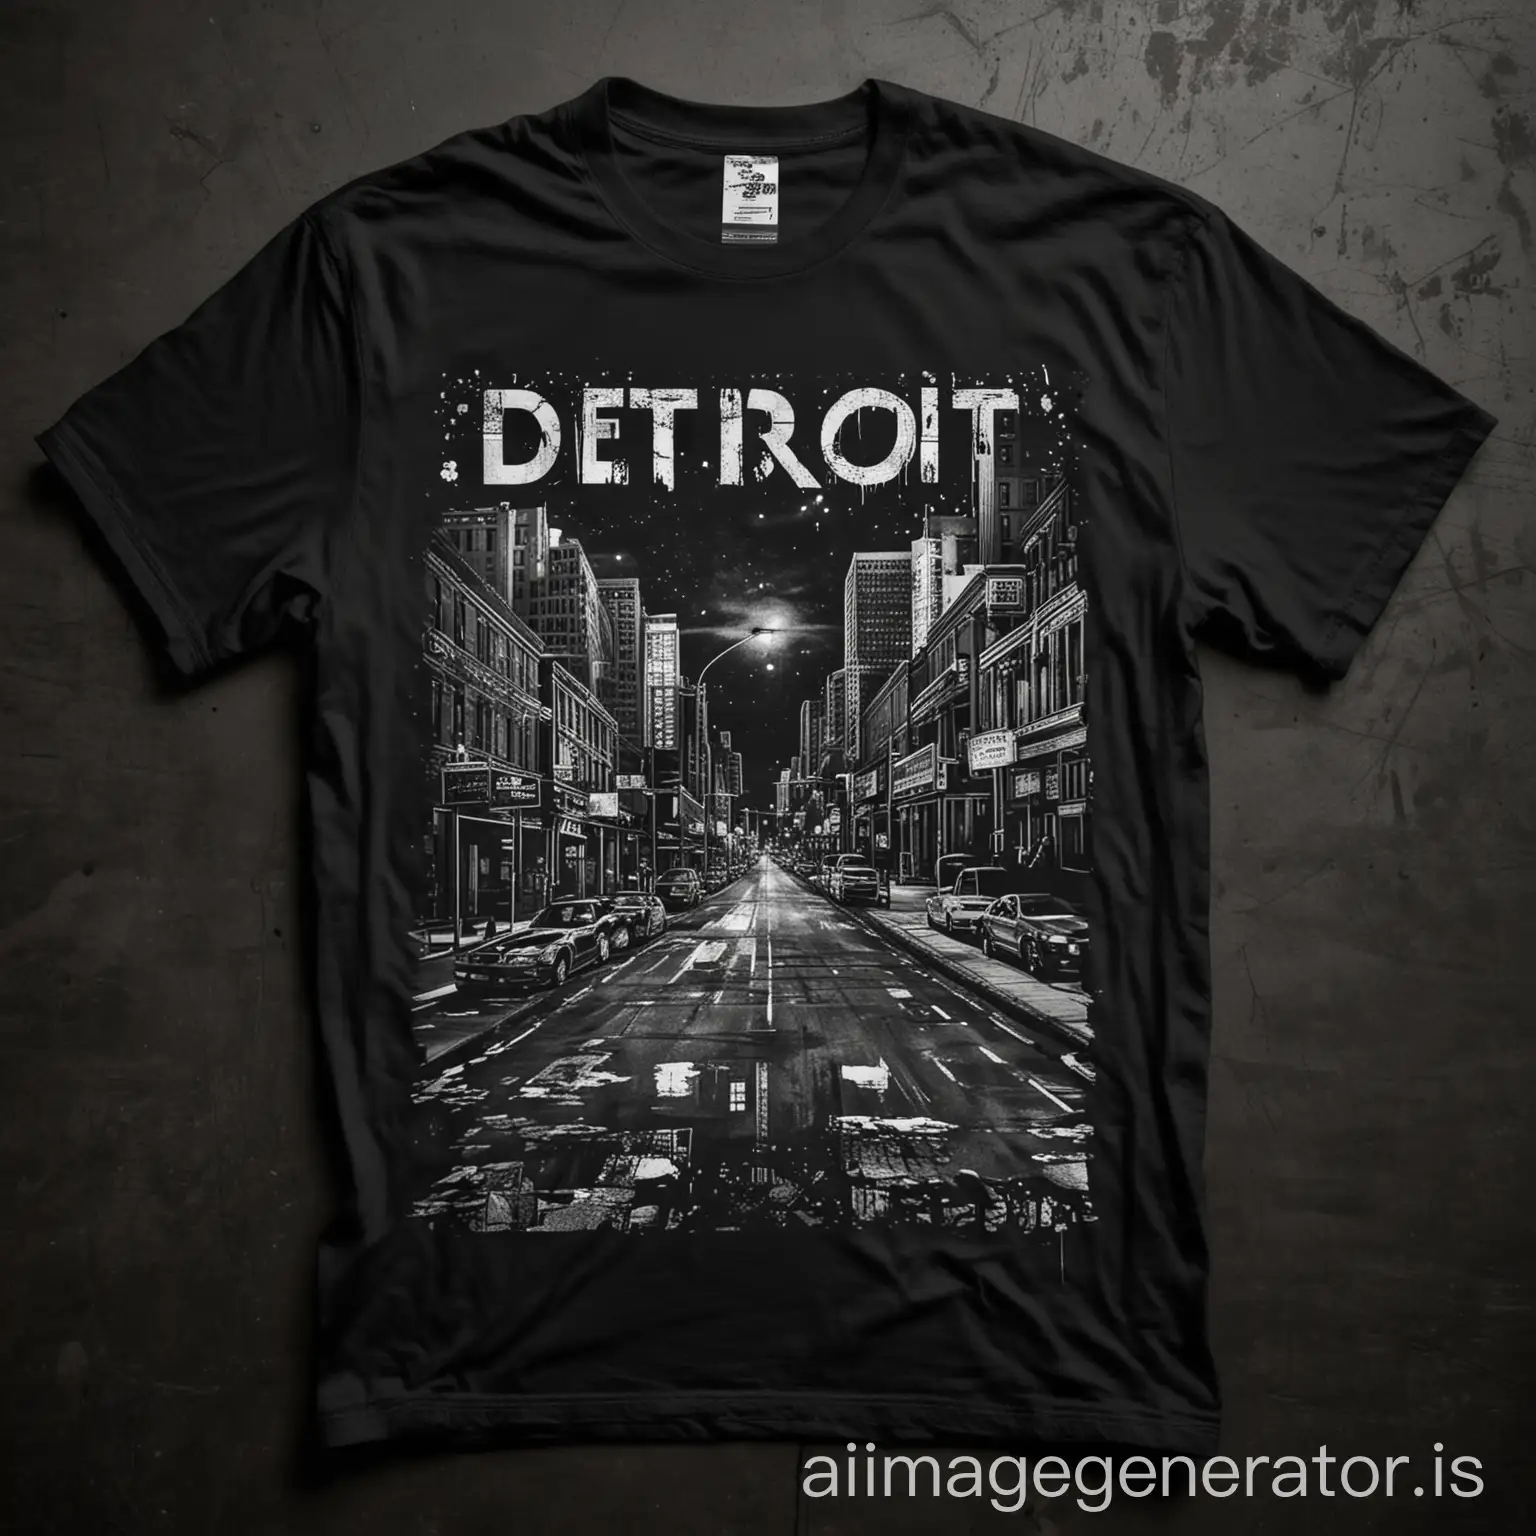 Detroit Street Life on Black T-shirt